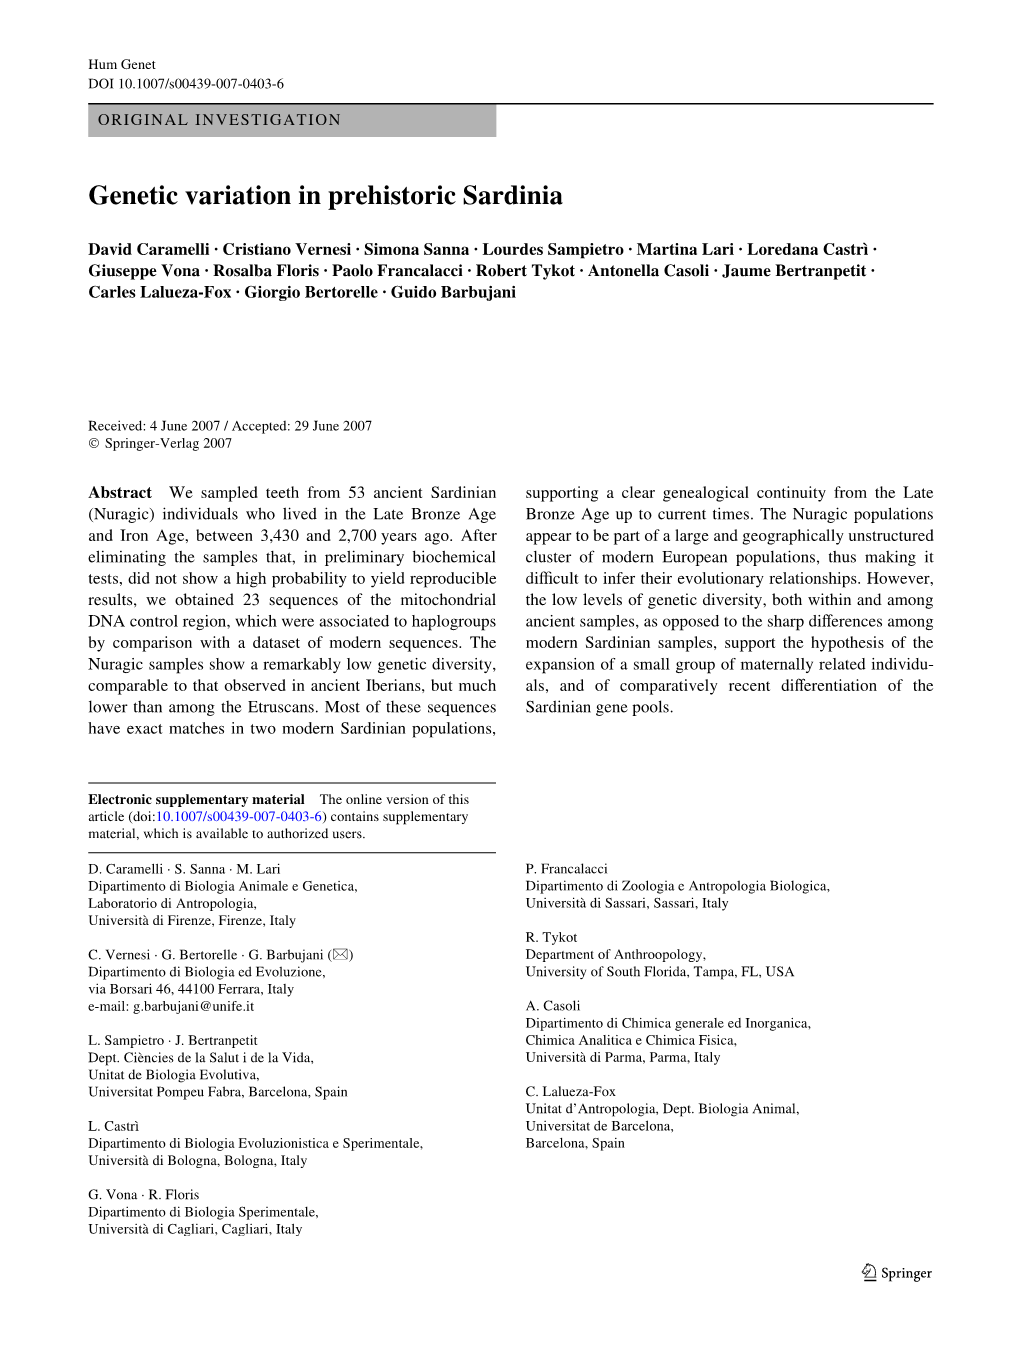 Genetic Variation in Prehistoric Sardinia